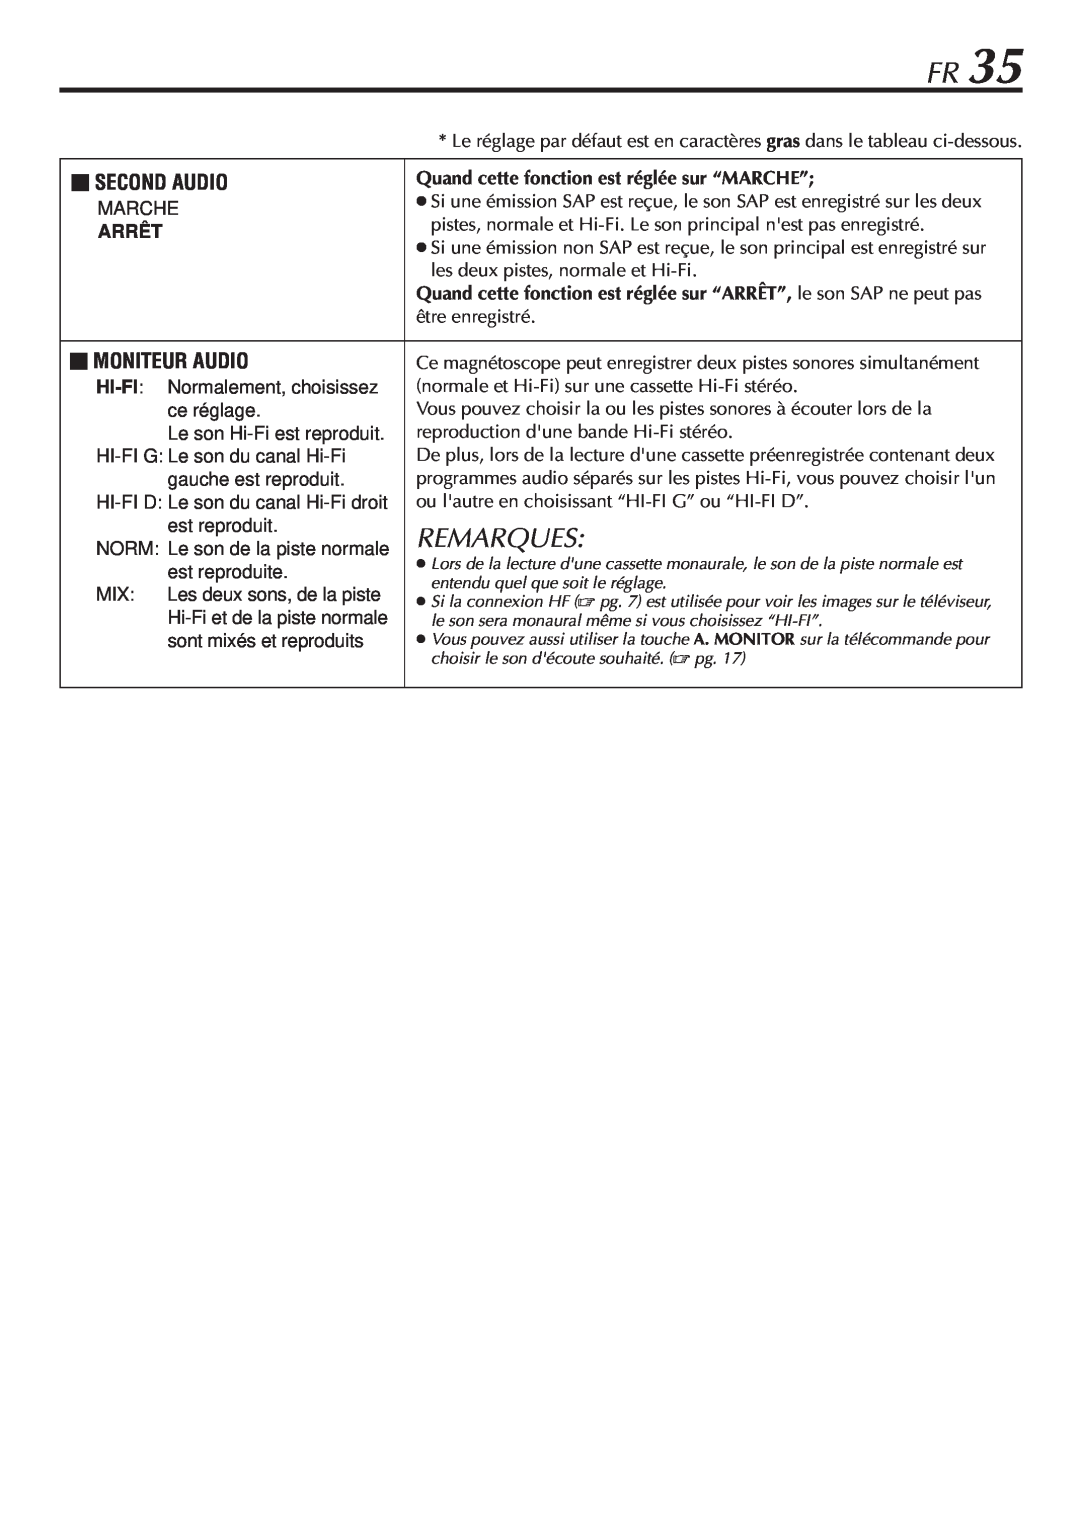 JVC HR-VP58U manual Second Audio, Moniteur Audio, Remarques, Arrêt, Hi-Fi 